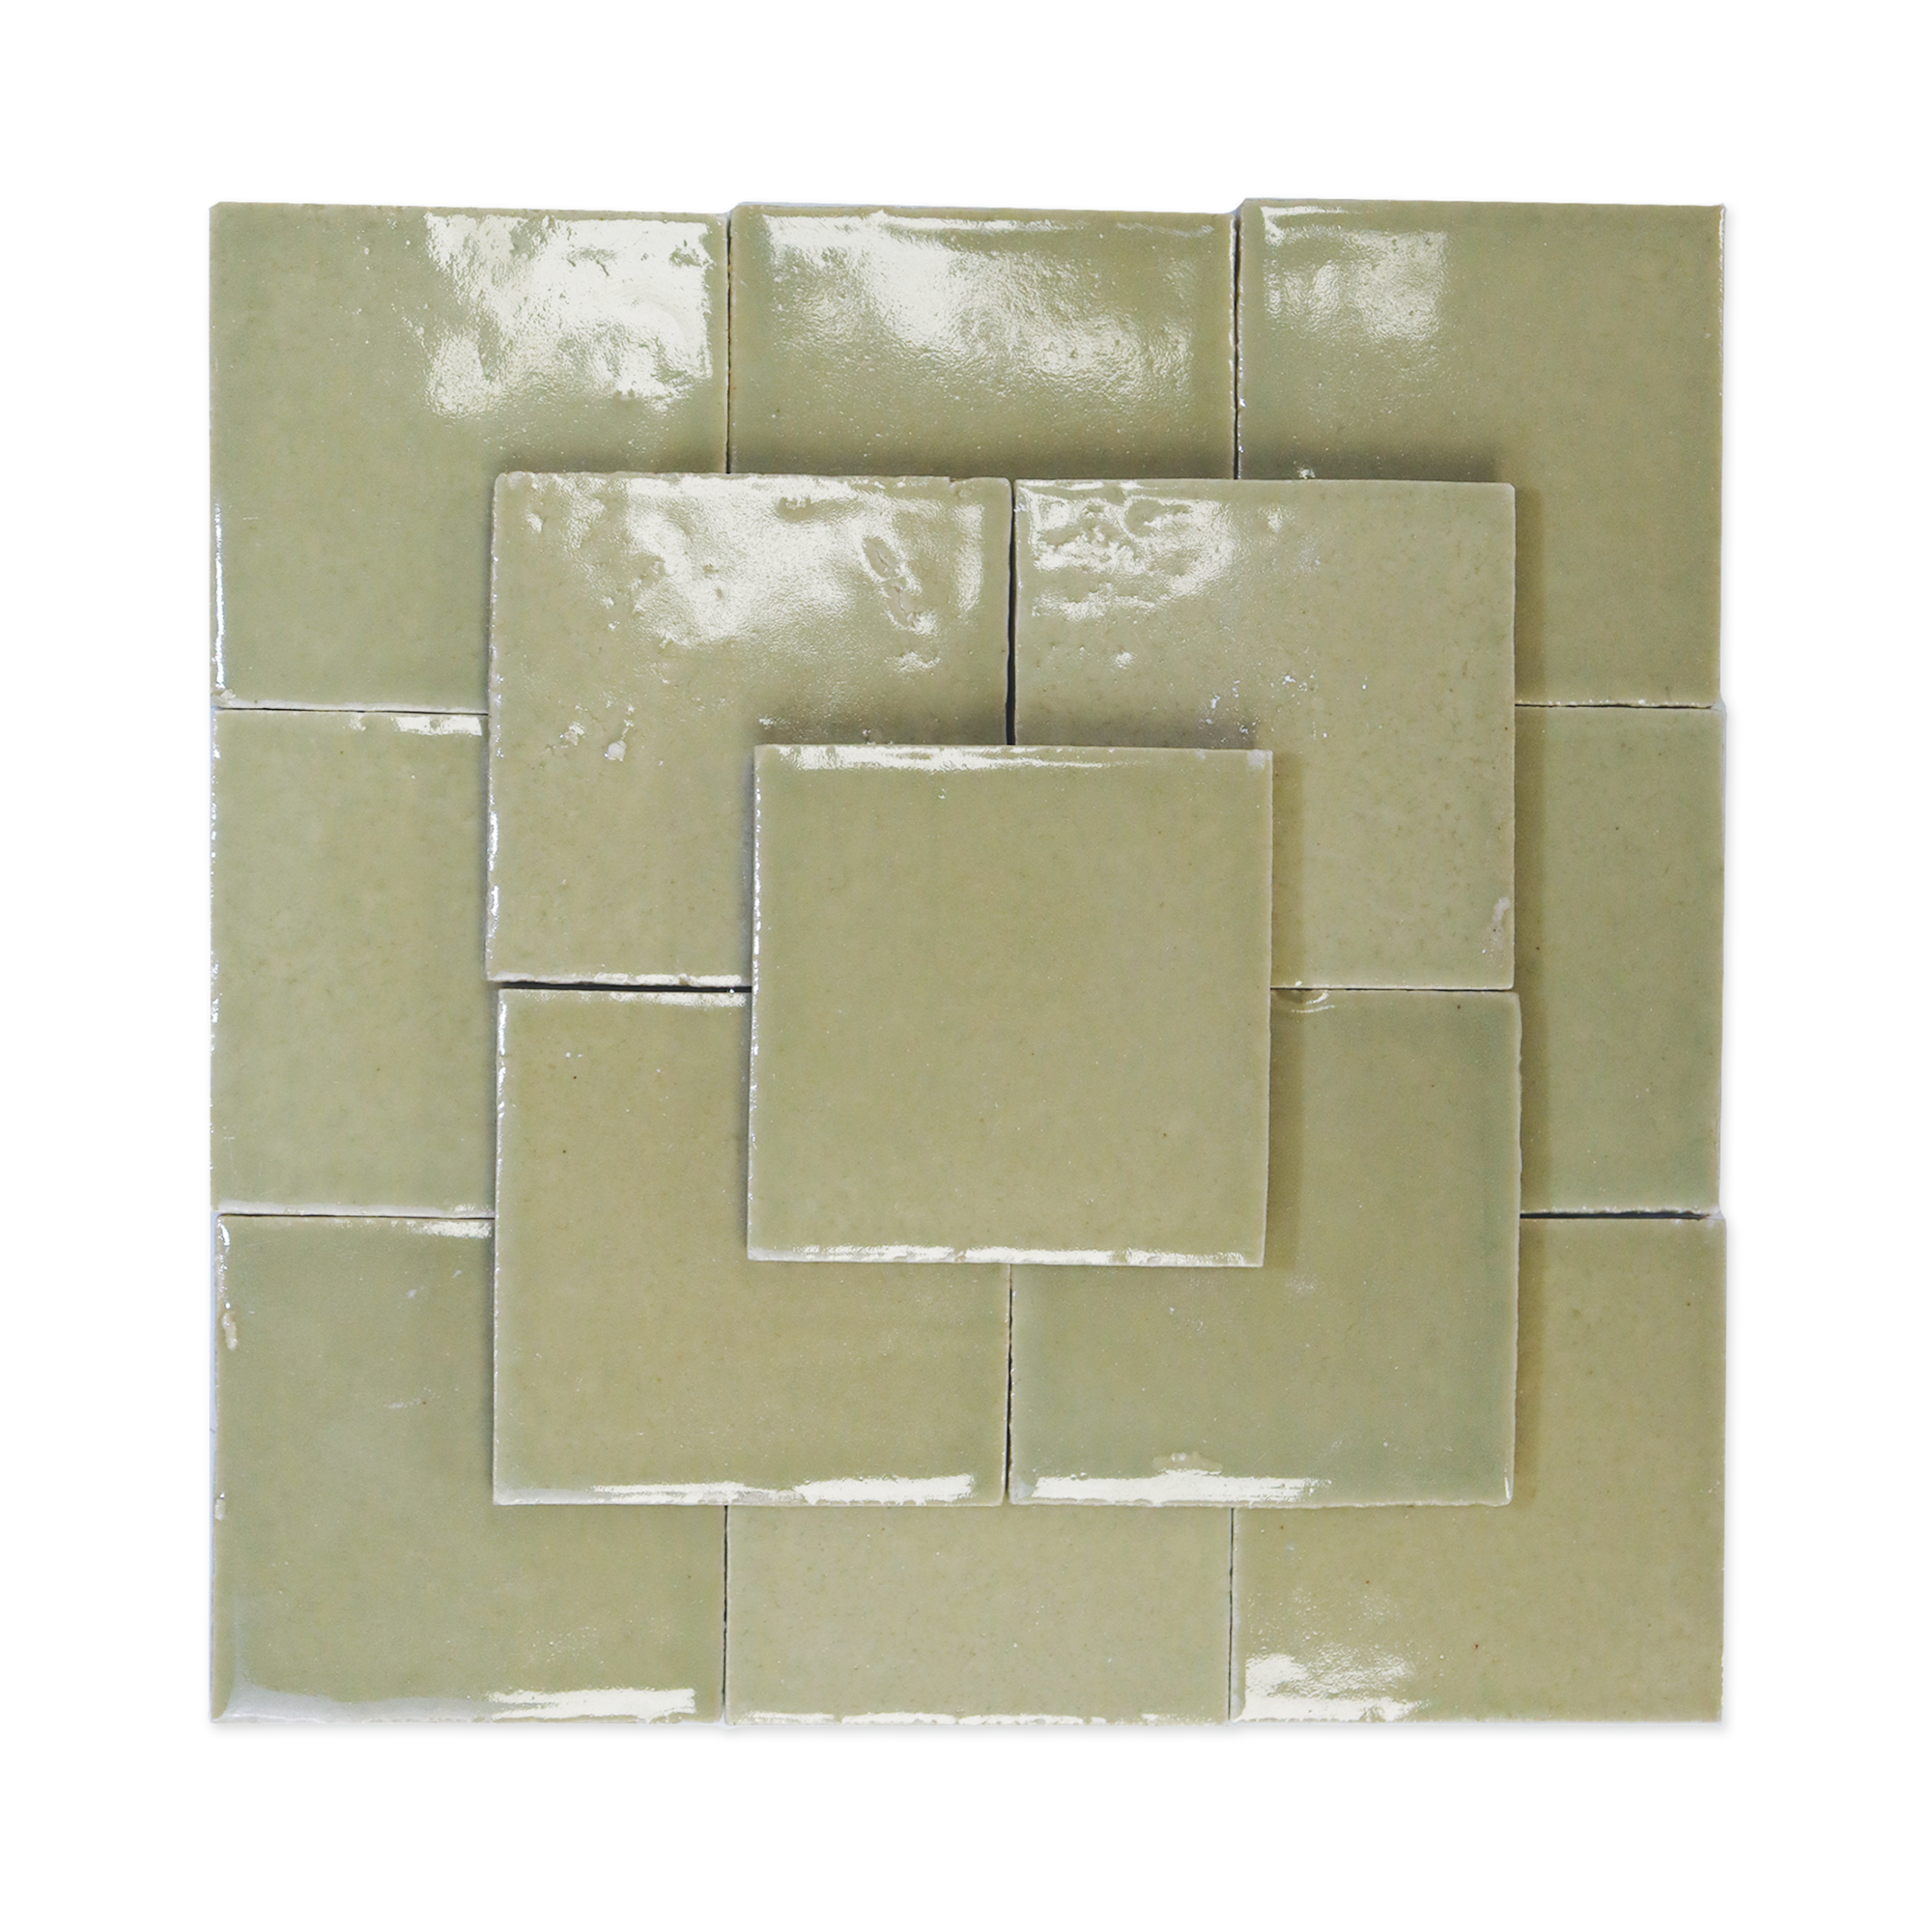 Stoneware 3.5x3.5 Barley Green Glossy Tile